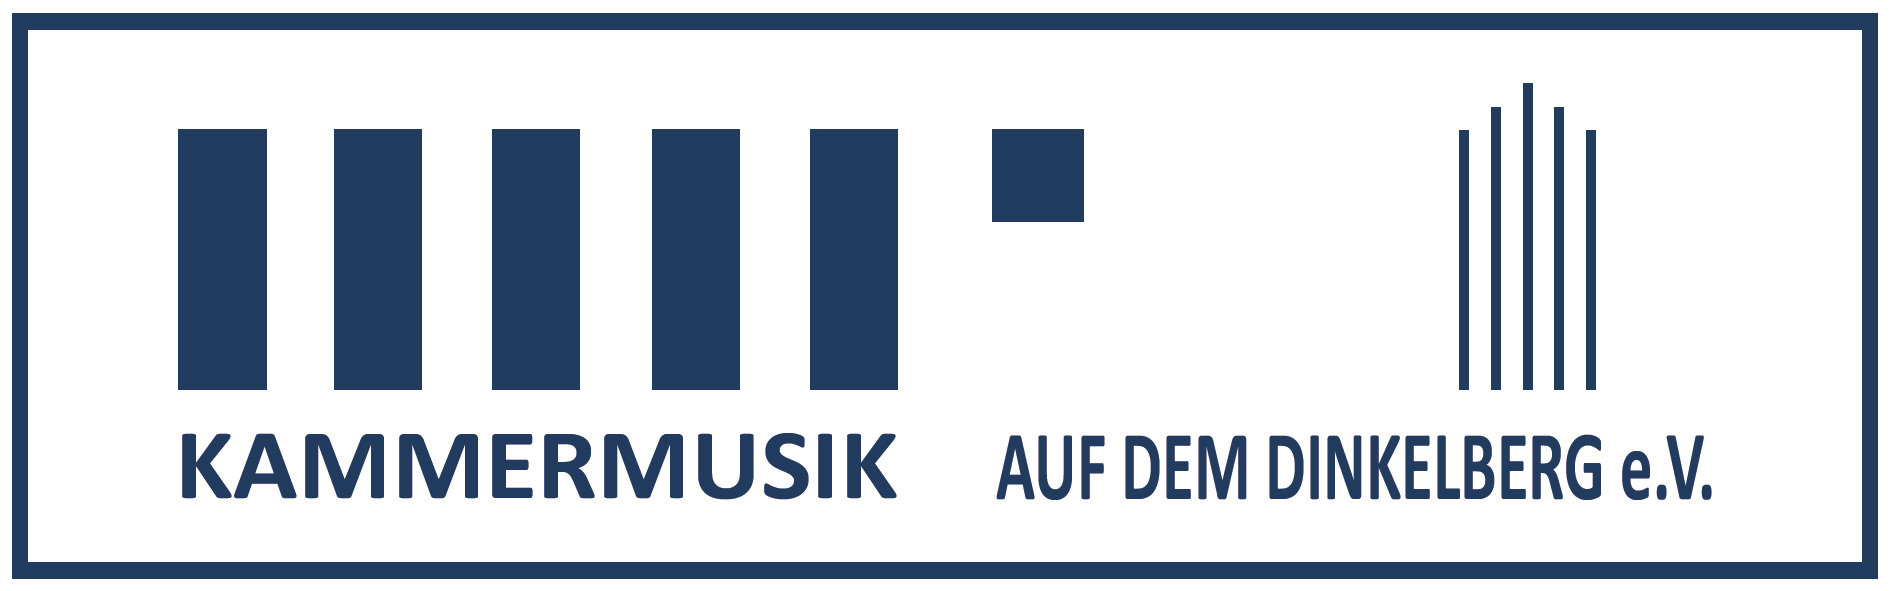 (c) Kammermusik-auf-dem-dinkelberg.de